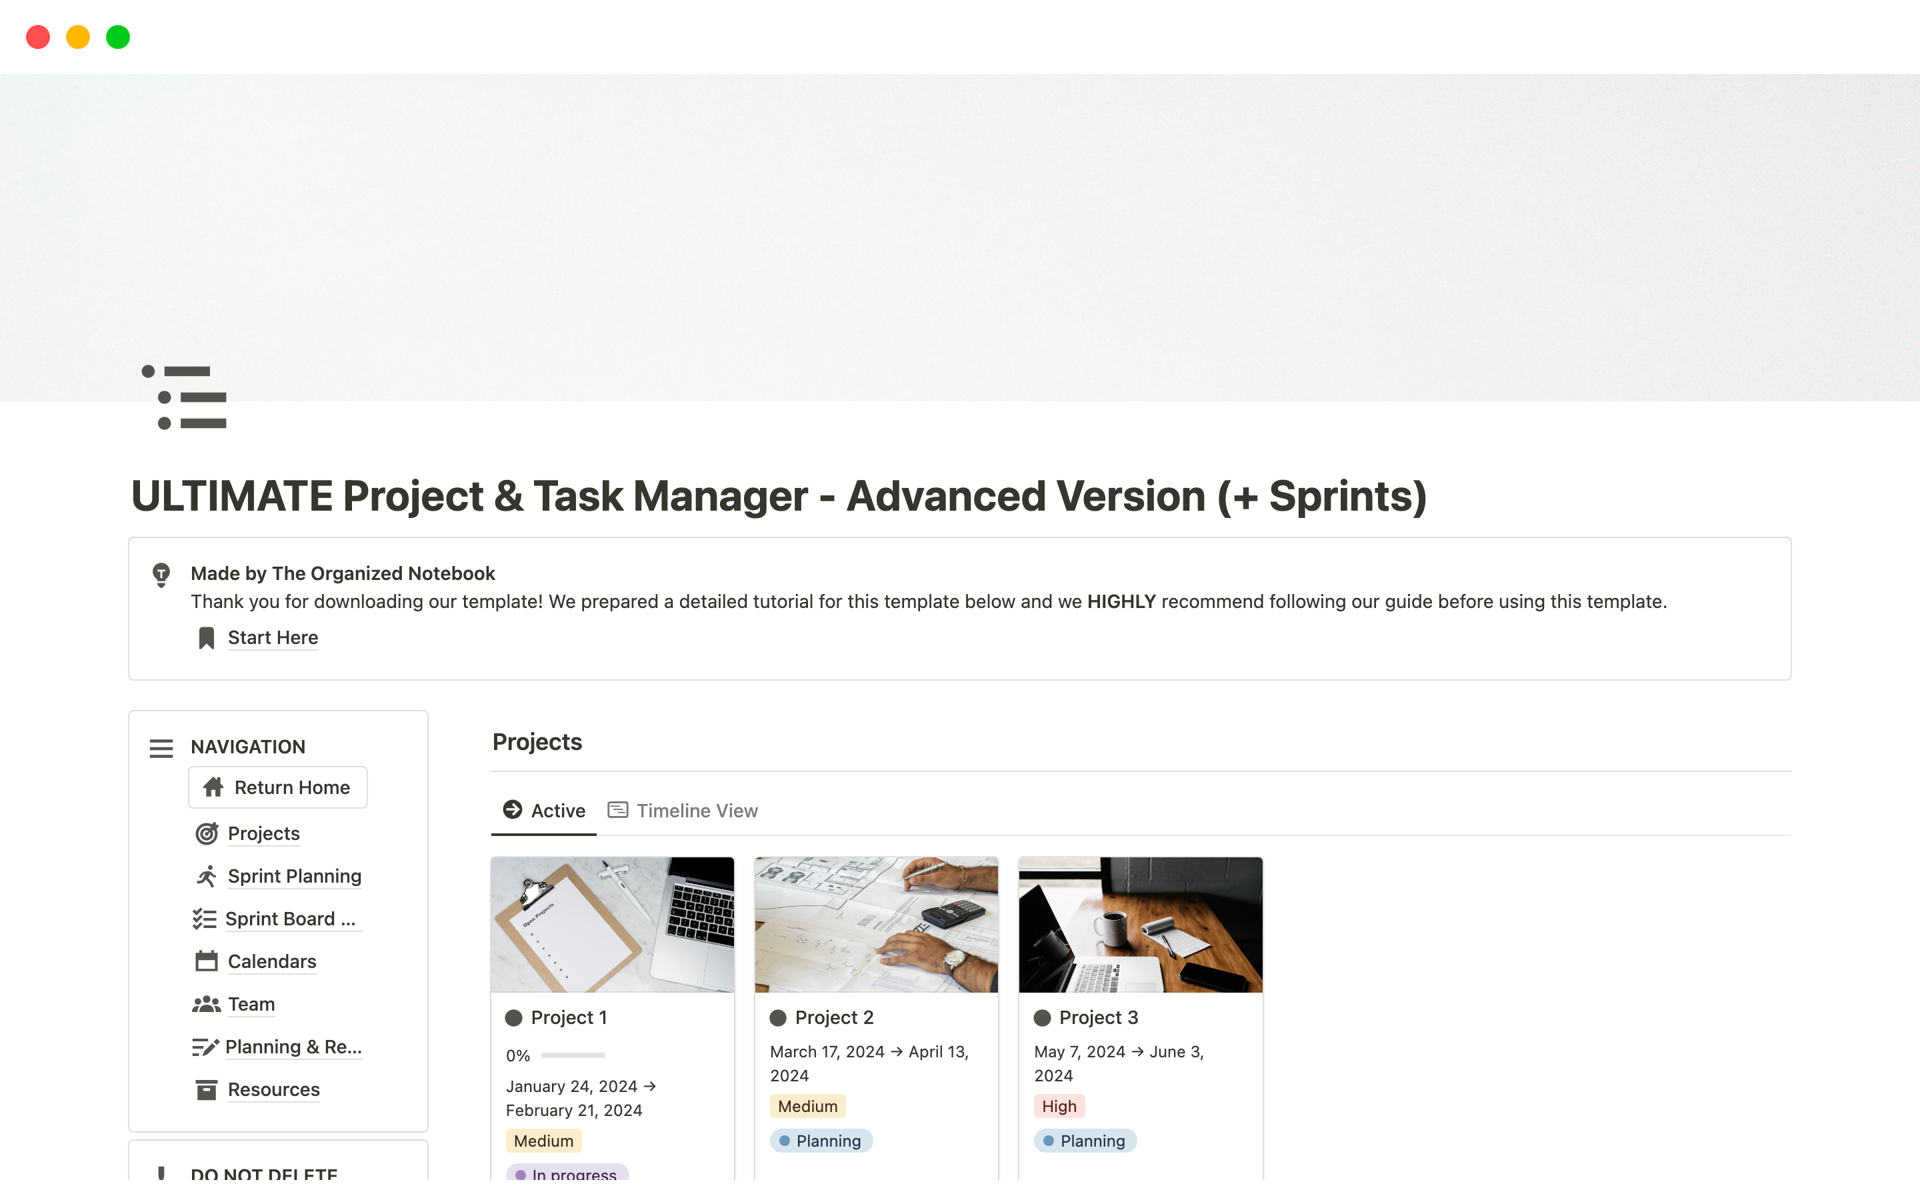 Vista previa de una plantilla para ULTIMATE Project & Task Manager - Advanced Version